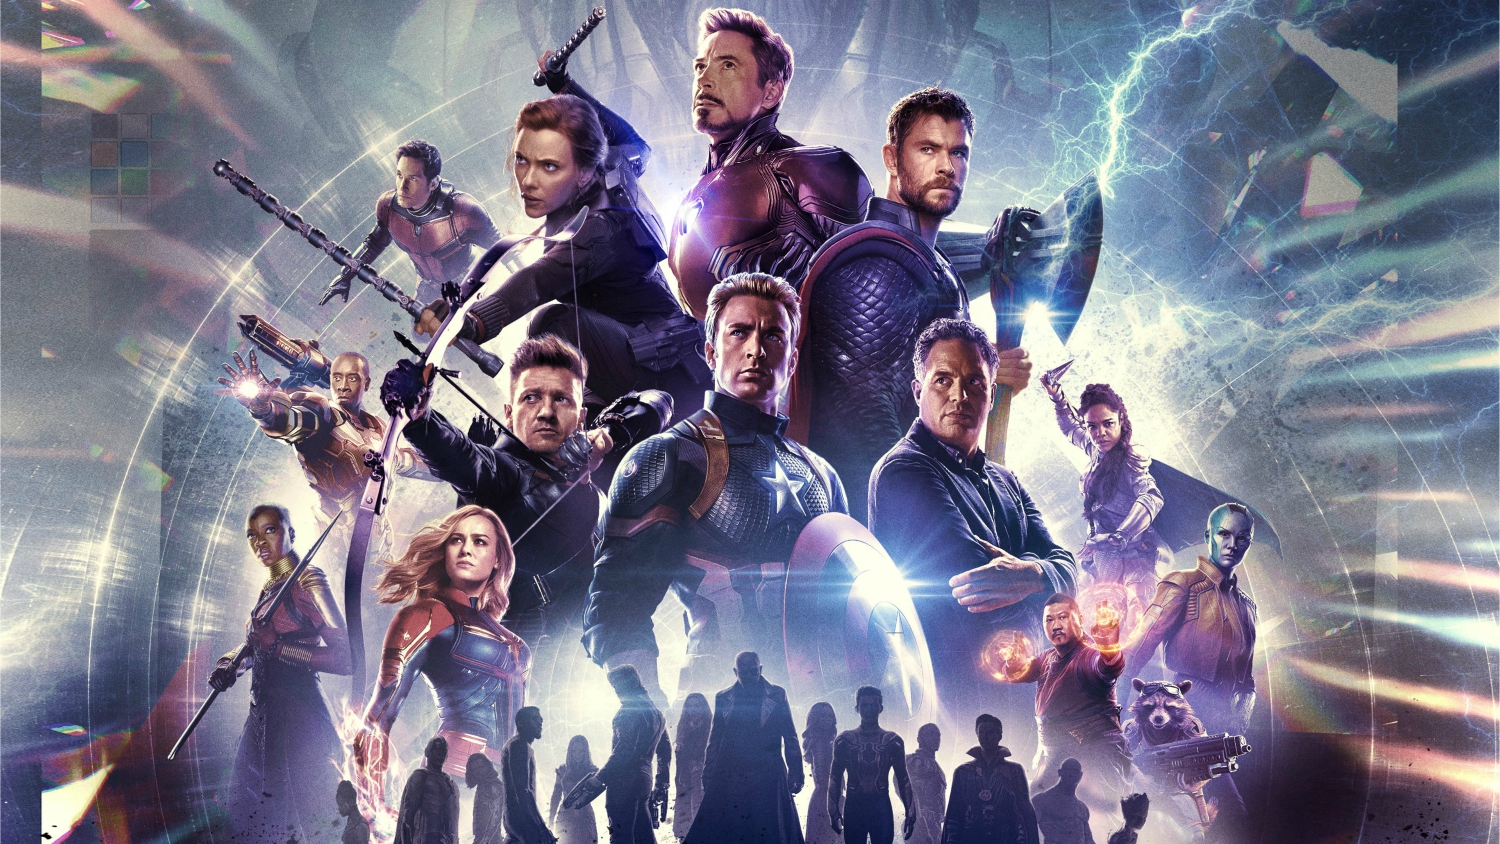 Avengers: Endgame - A Closer Look